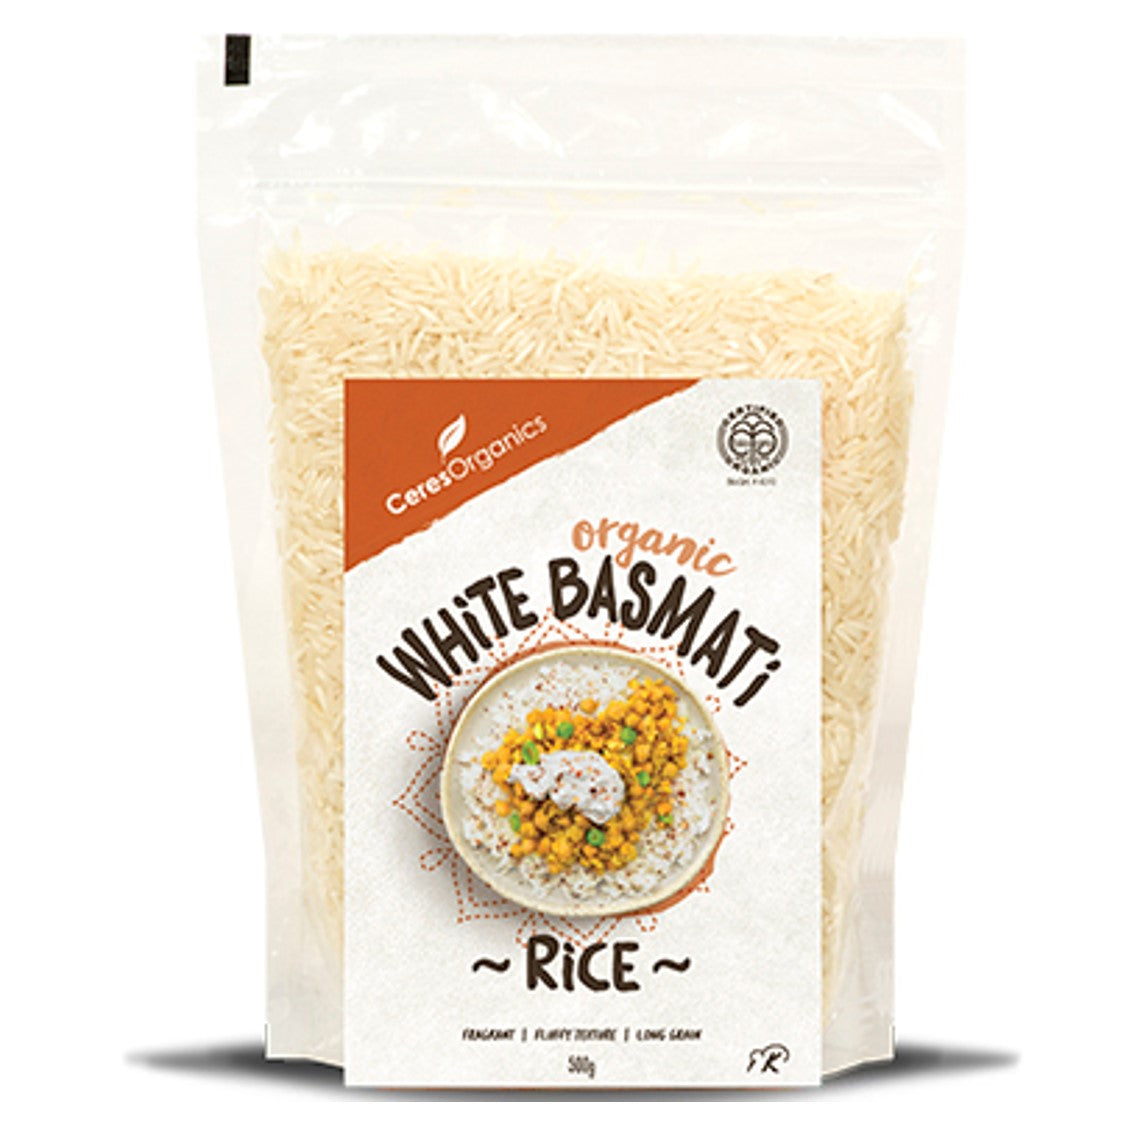 Ceres Organics White Rice Basmati,.500g-NaturesWisdom